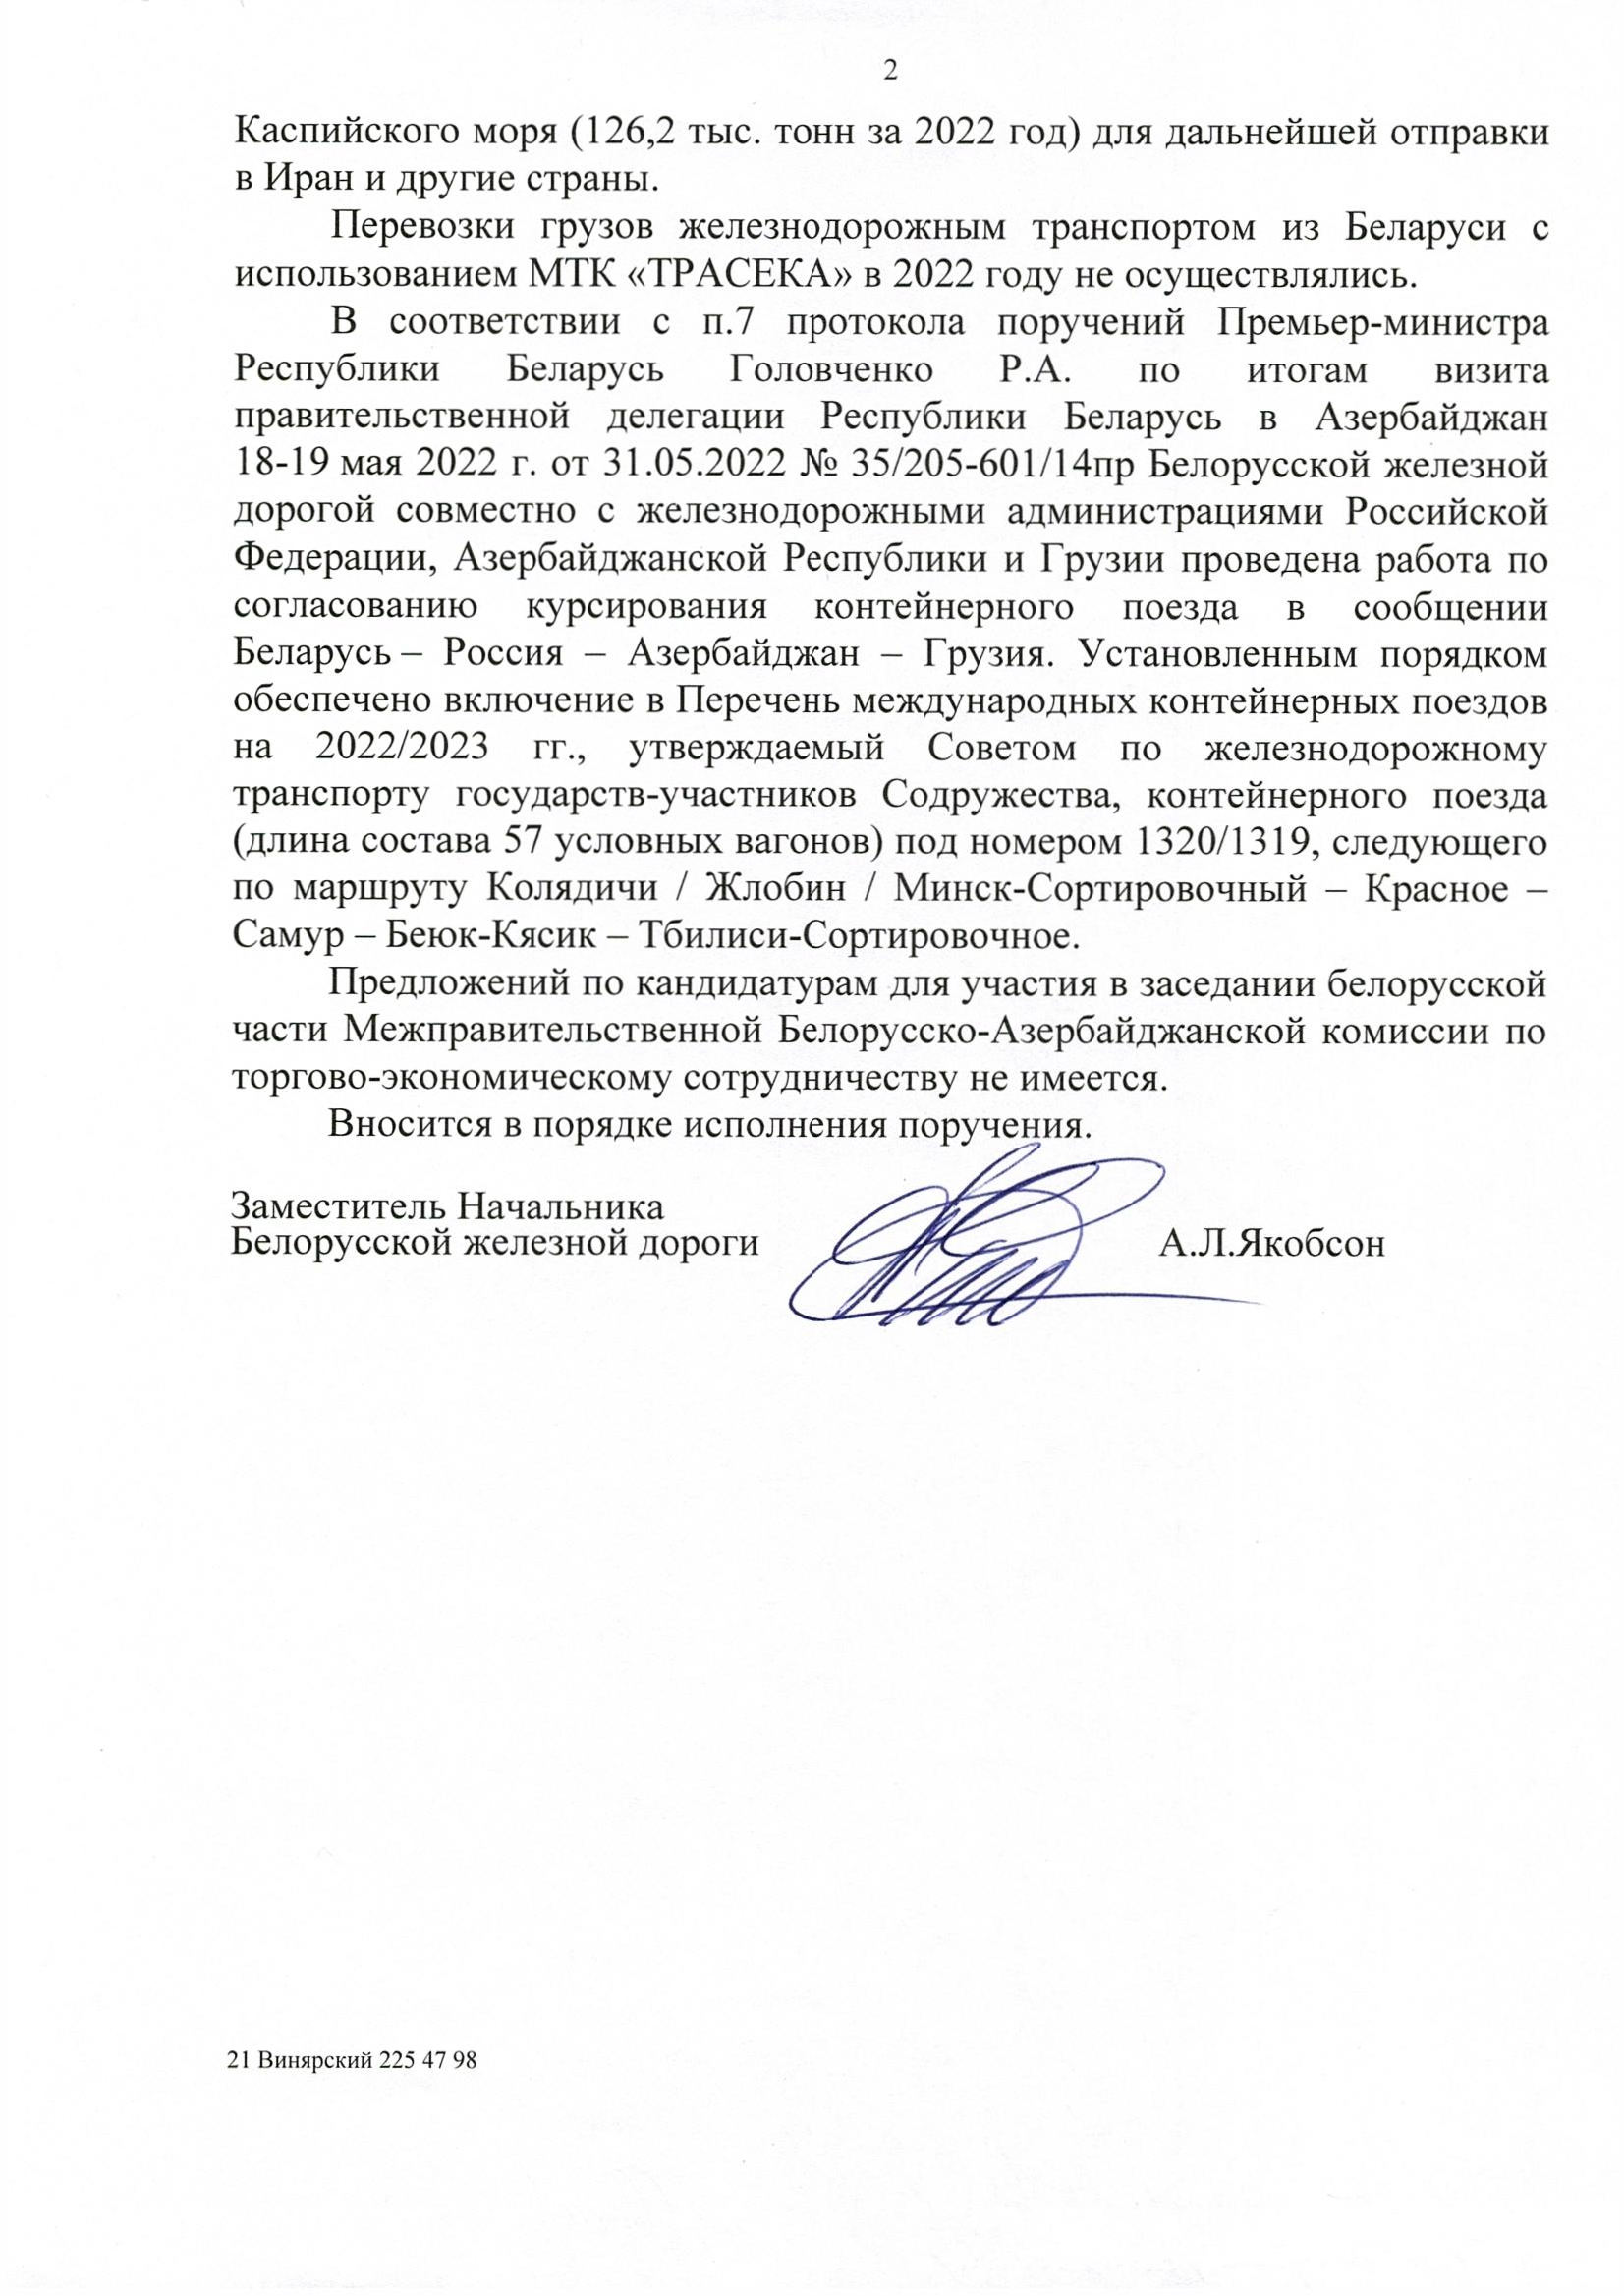 Письмо БЖД в Министерство транспорта от 09.02.2023 (Страница 2)